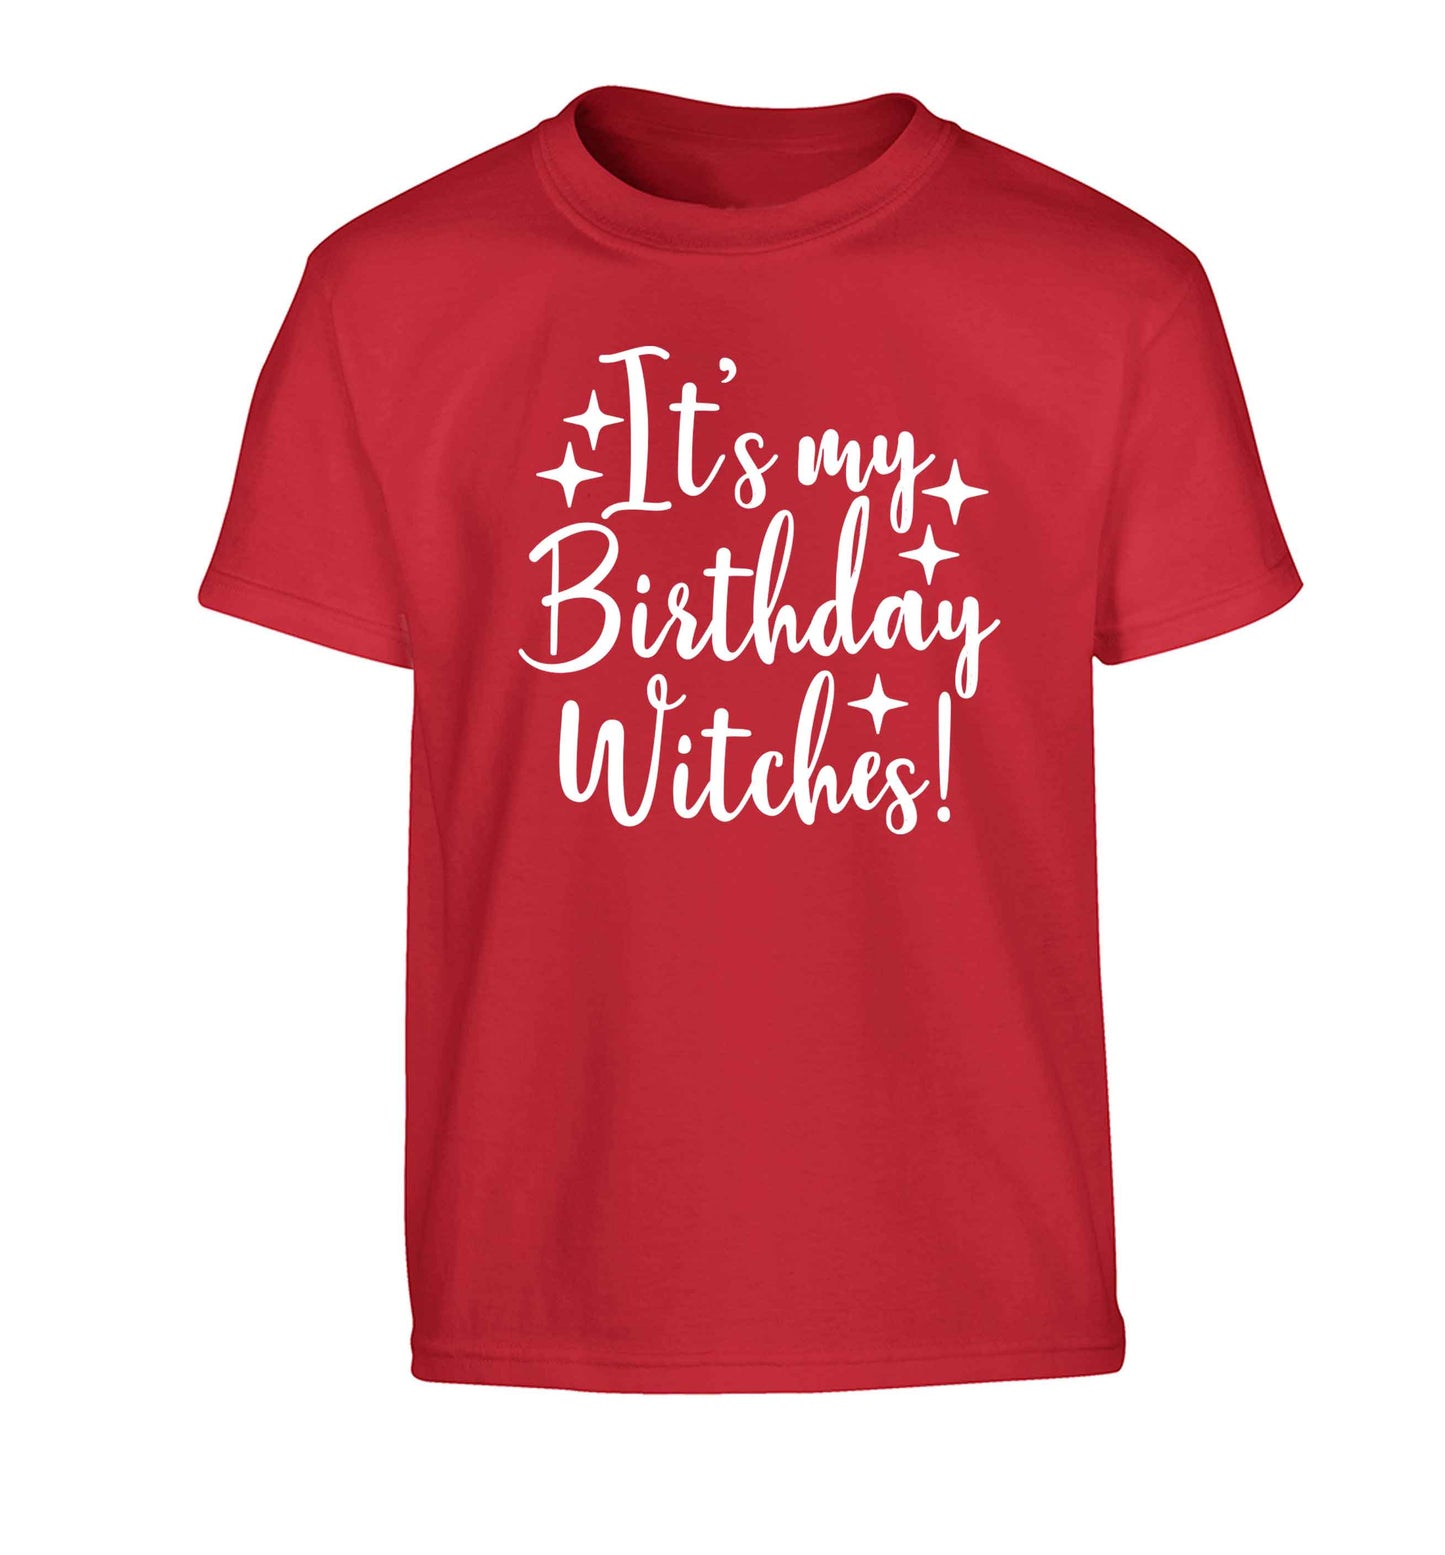 It's my birthday witches!Children's red Tshirt 12-13 Years